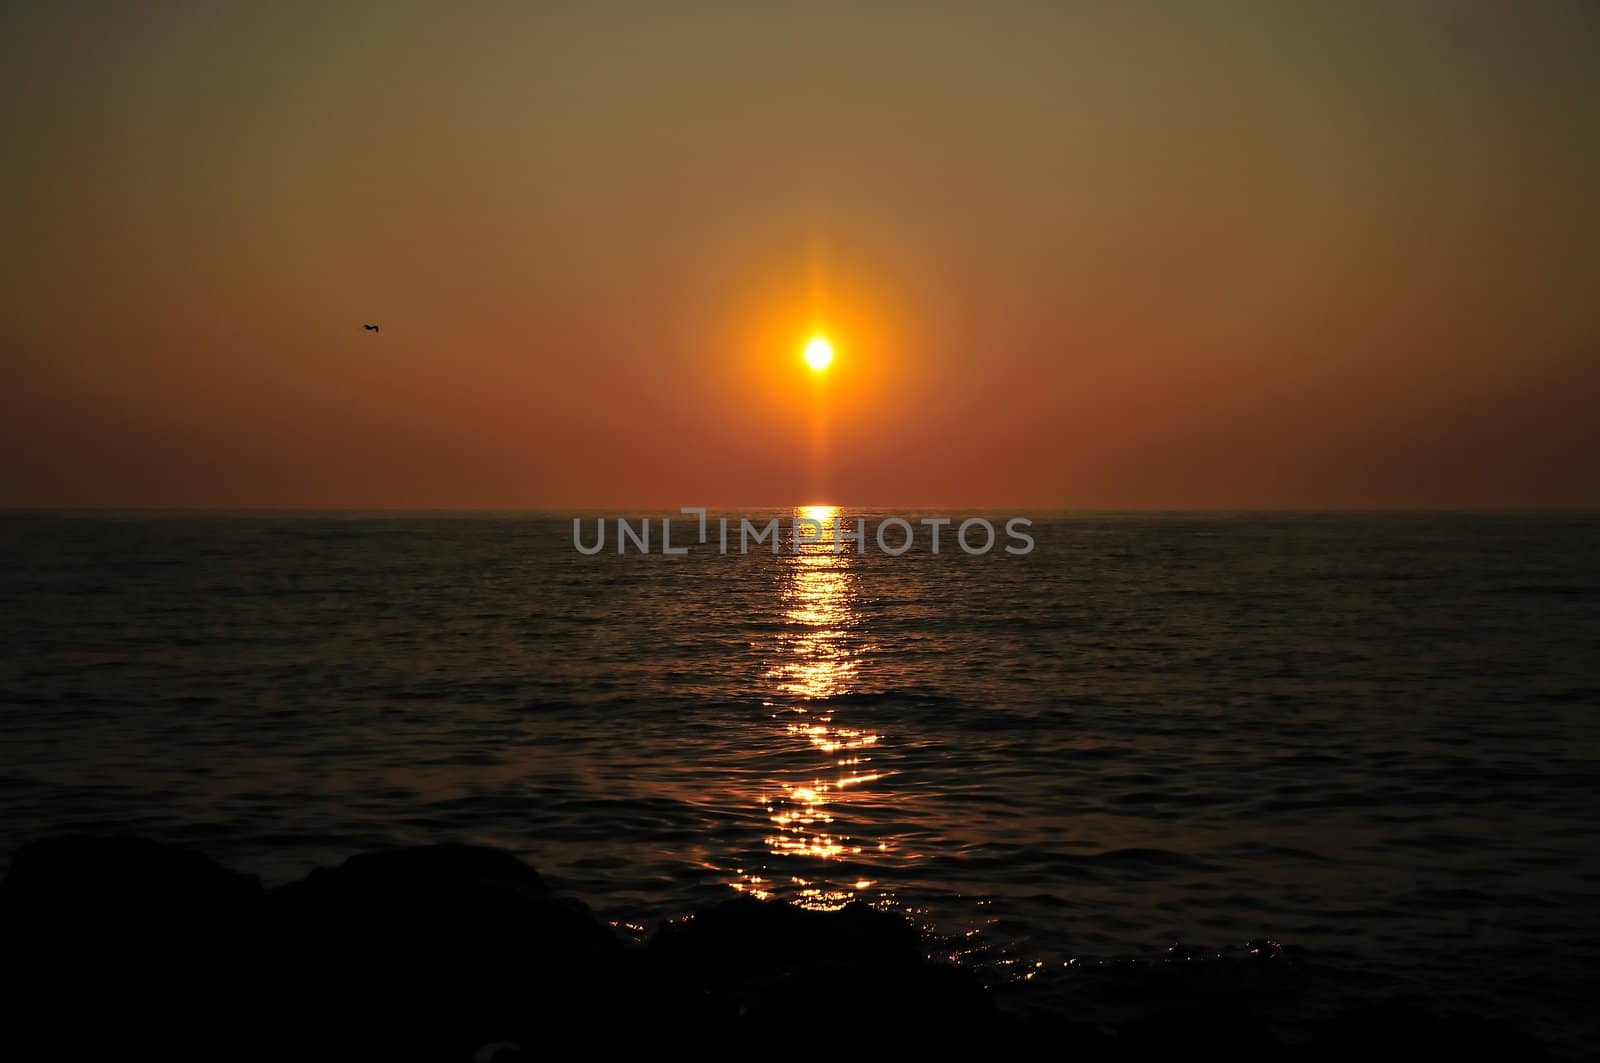 sun setting over the Black sea, little bird flying towards the sun